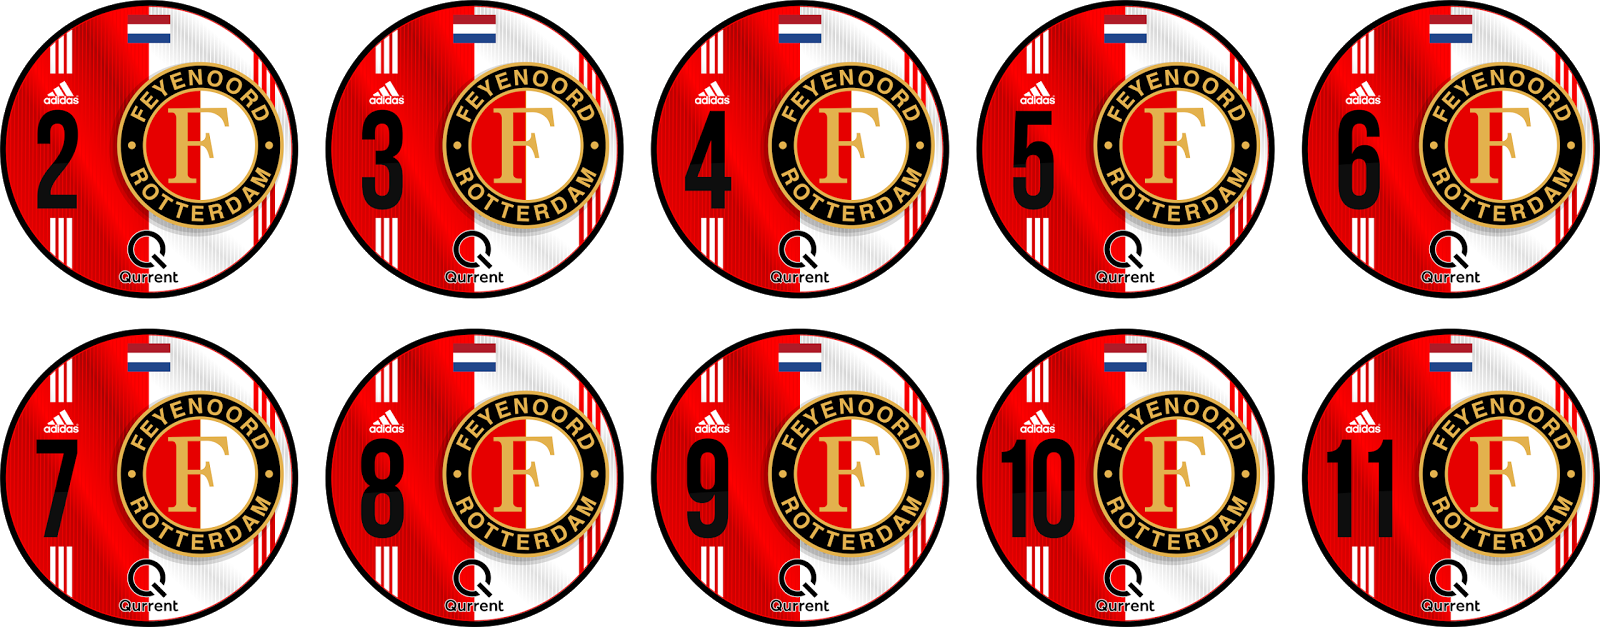 Feyenoord - 2010 (1600x627)